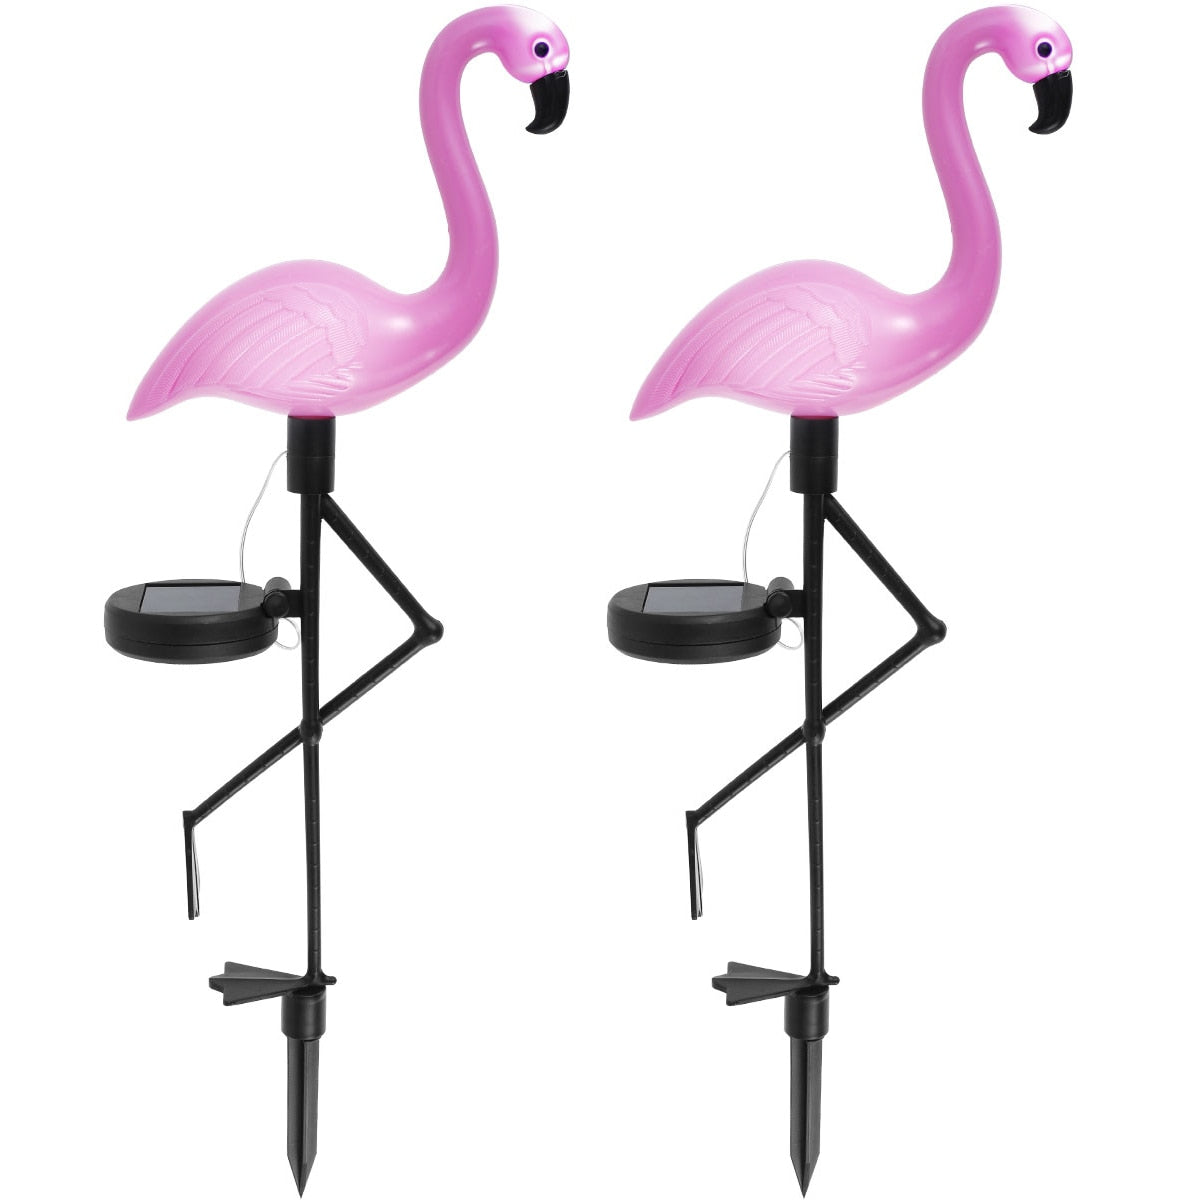 3PCS Flamingo Solar Light Waterproof LED Pink Flamingo Stake Light Landscape